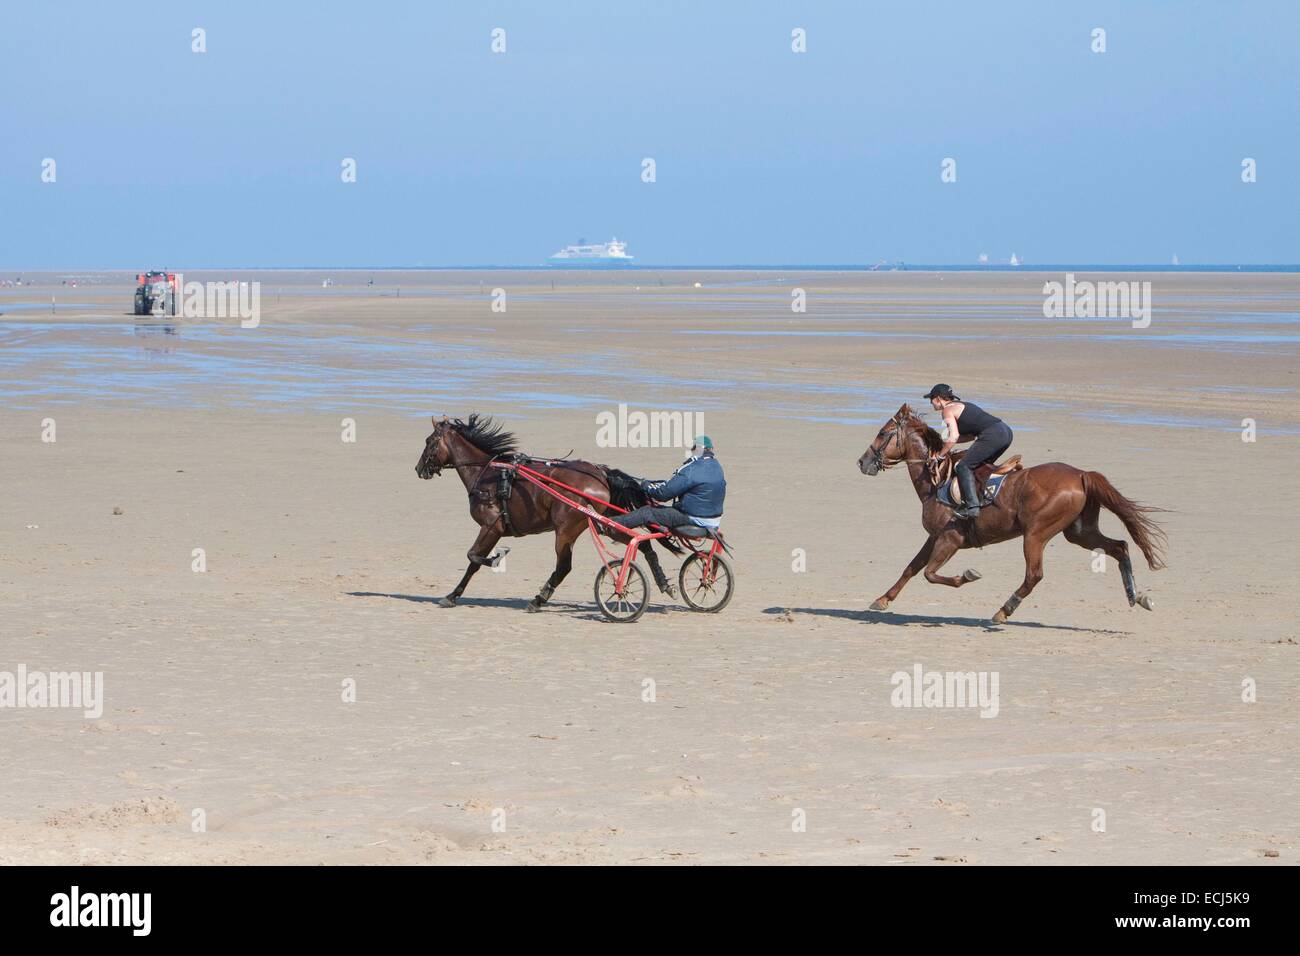 France, Pas de Calais, Les Hemmes de Marck, coupling and rider galloping Stock Photo